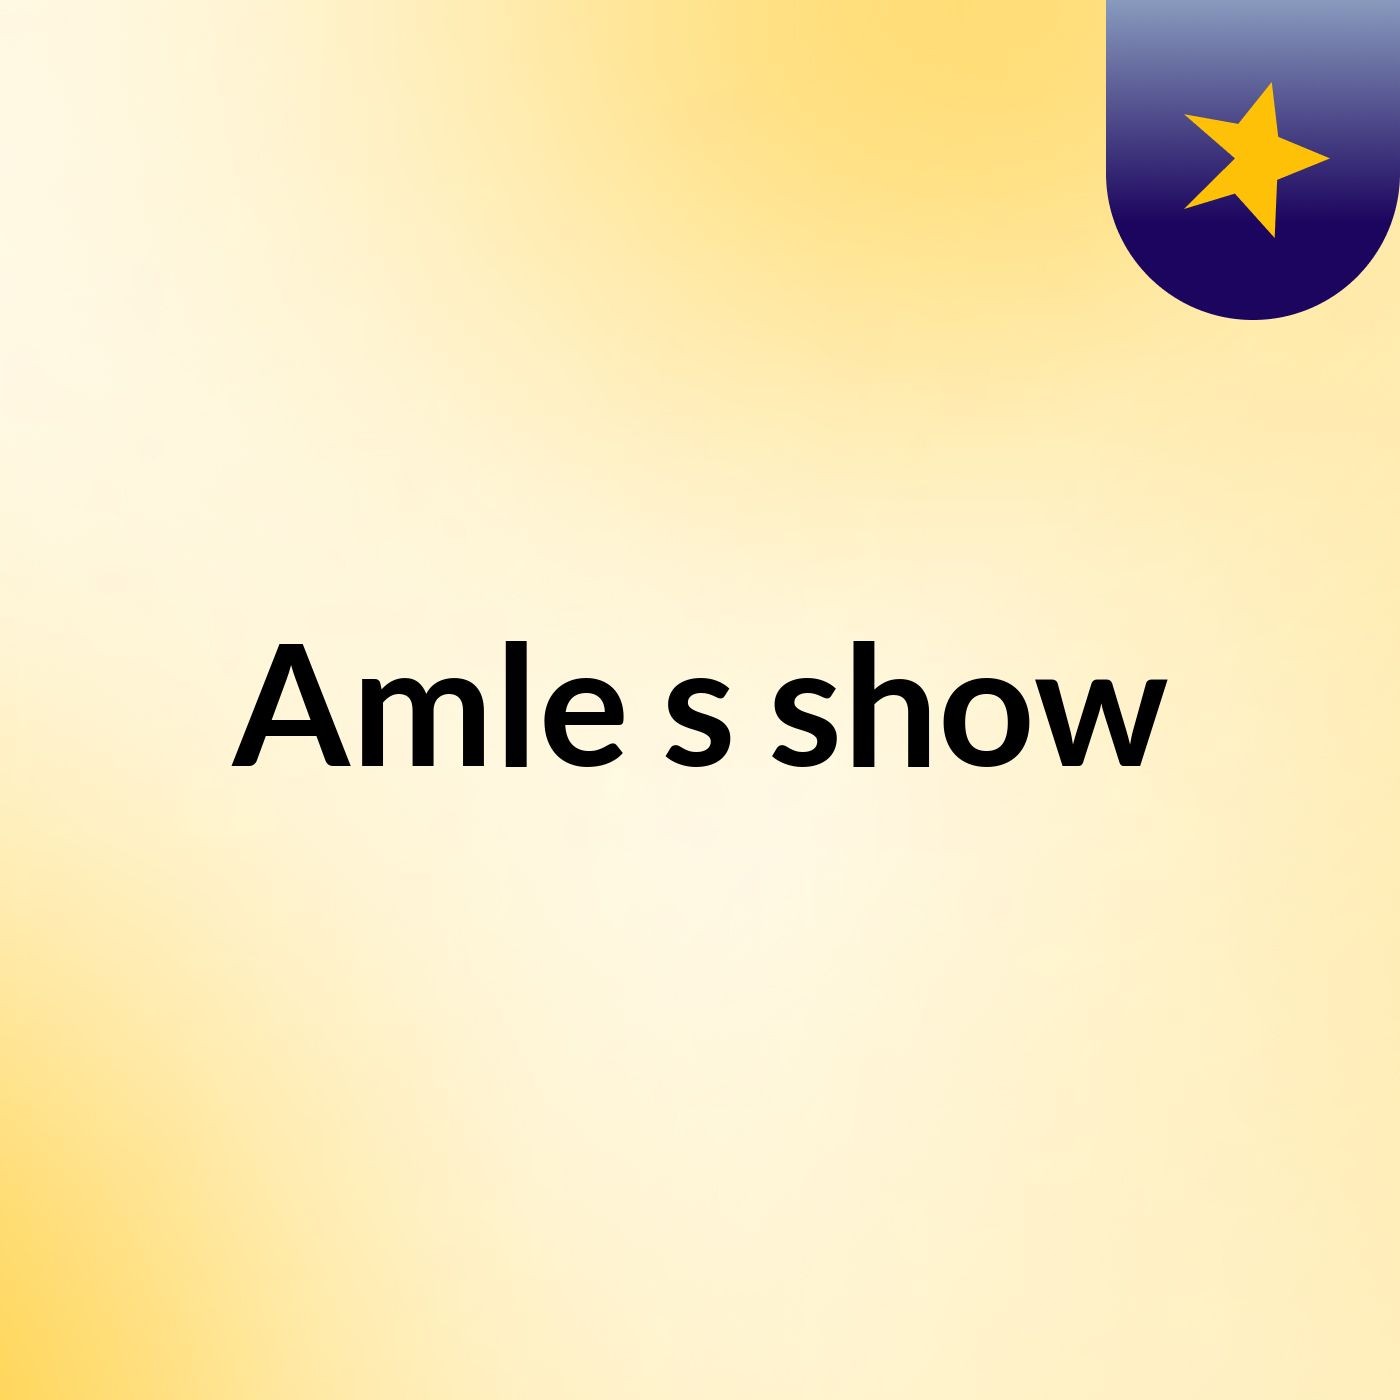 Amle's show